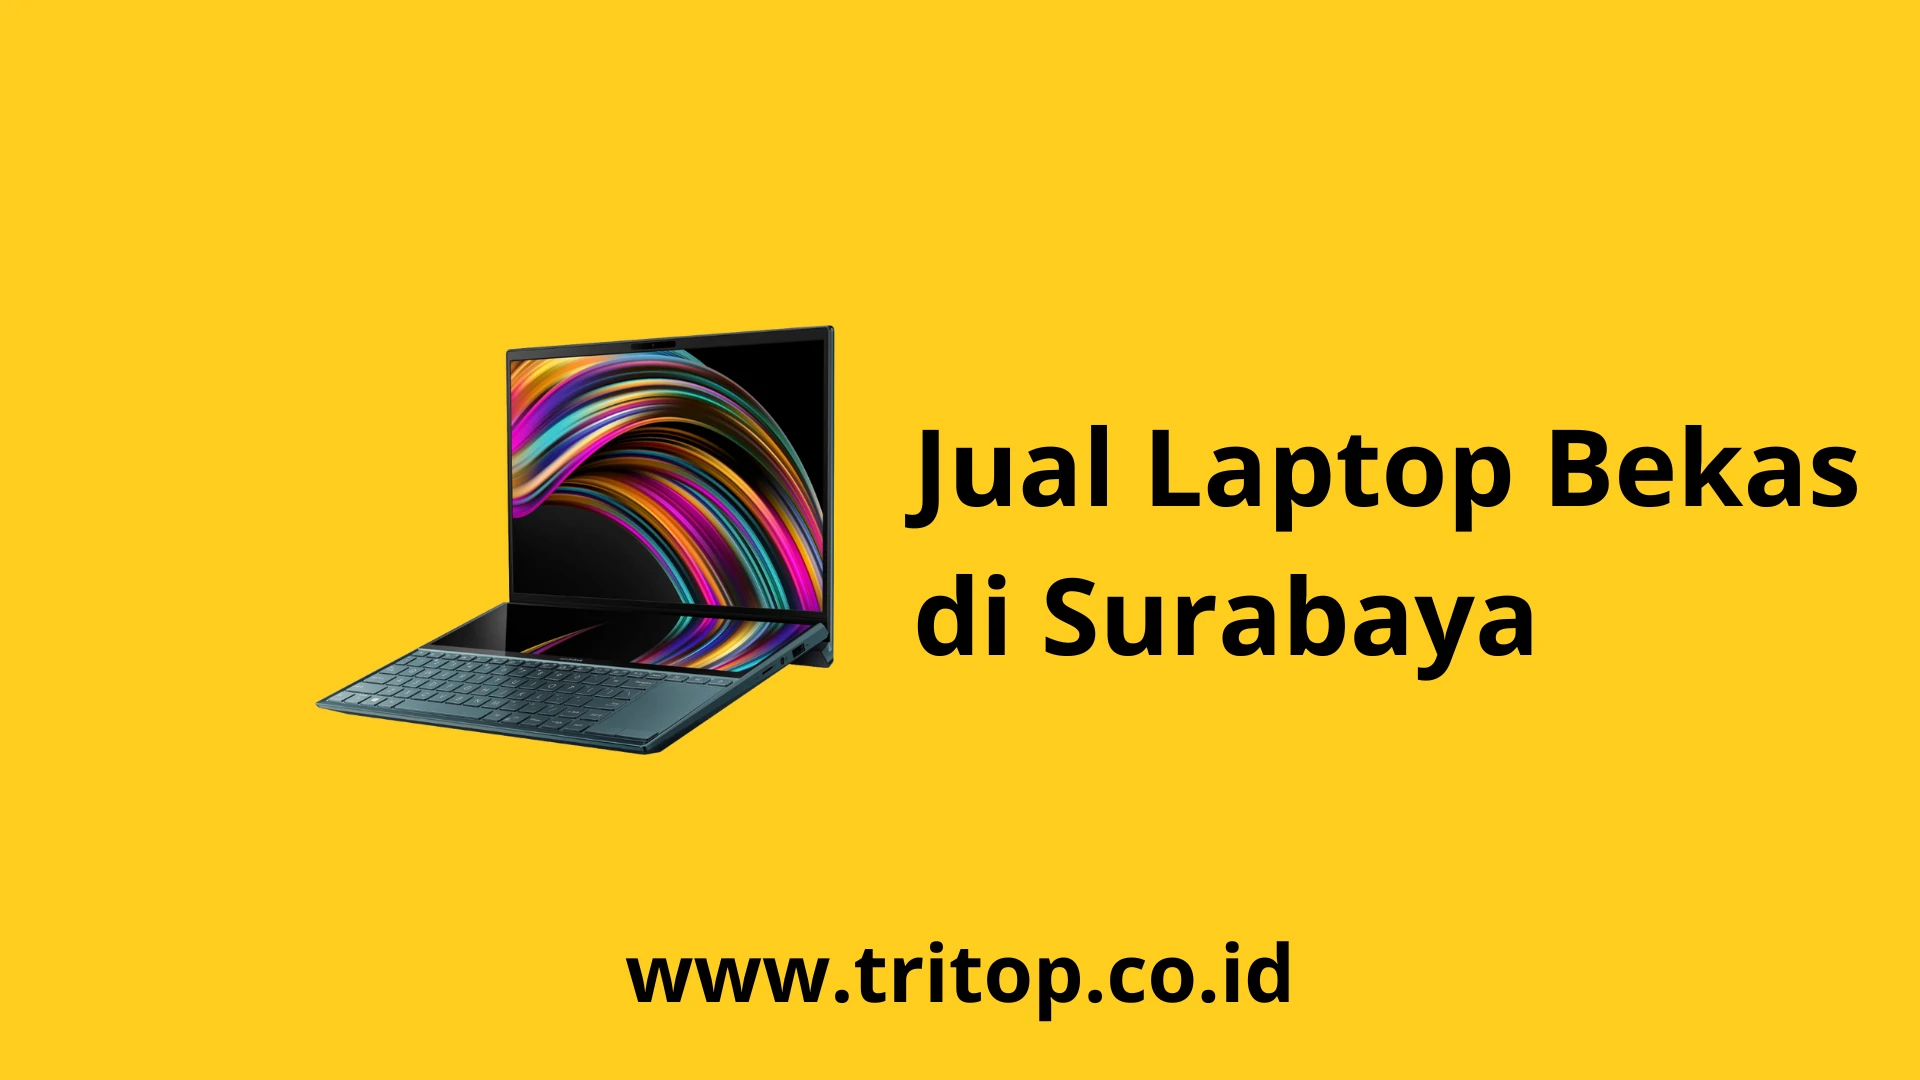 Jual Laptop Bekas Surabaya Tritop.co.id